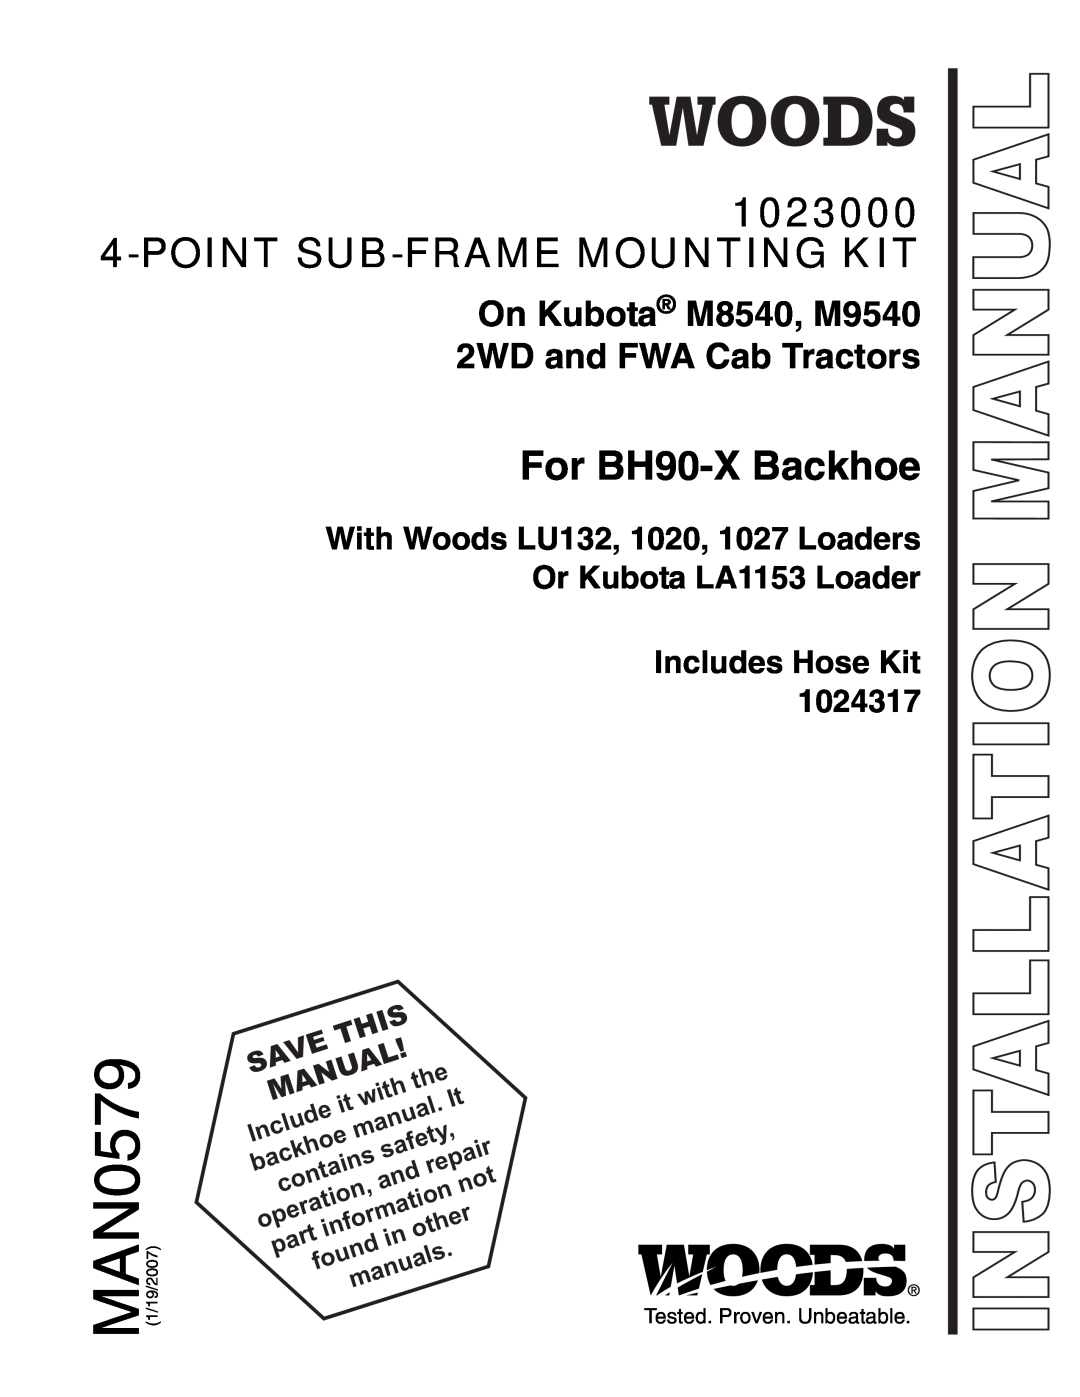 Woods Equipment 1023000 installation manual With Woods LU132, 1020, 1027 Loaders Or Kubota LA1153 Loader, MAN0579, Save 